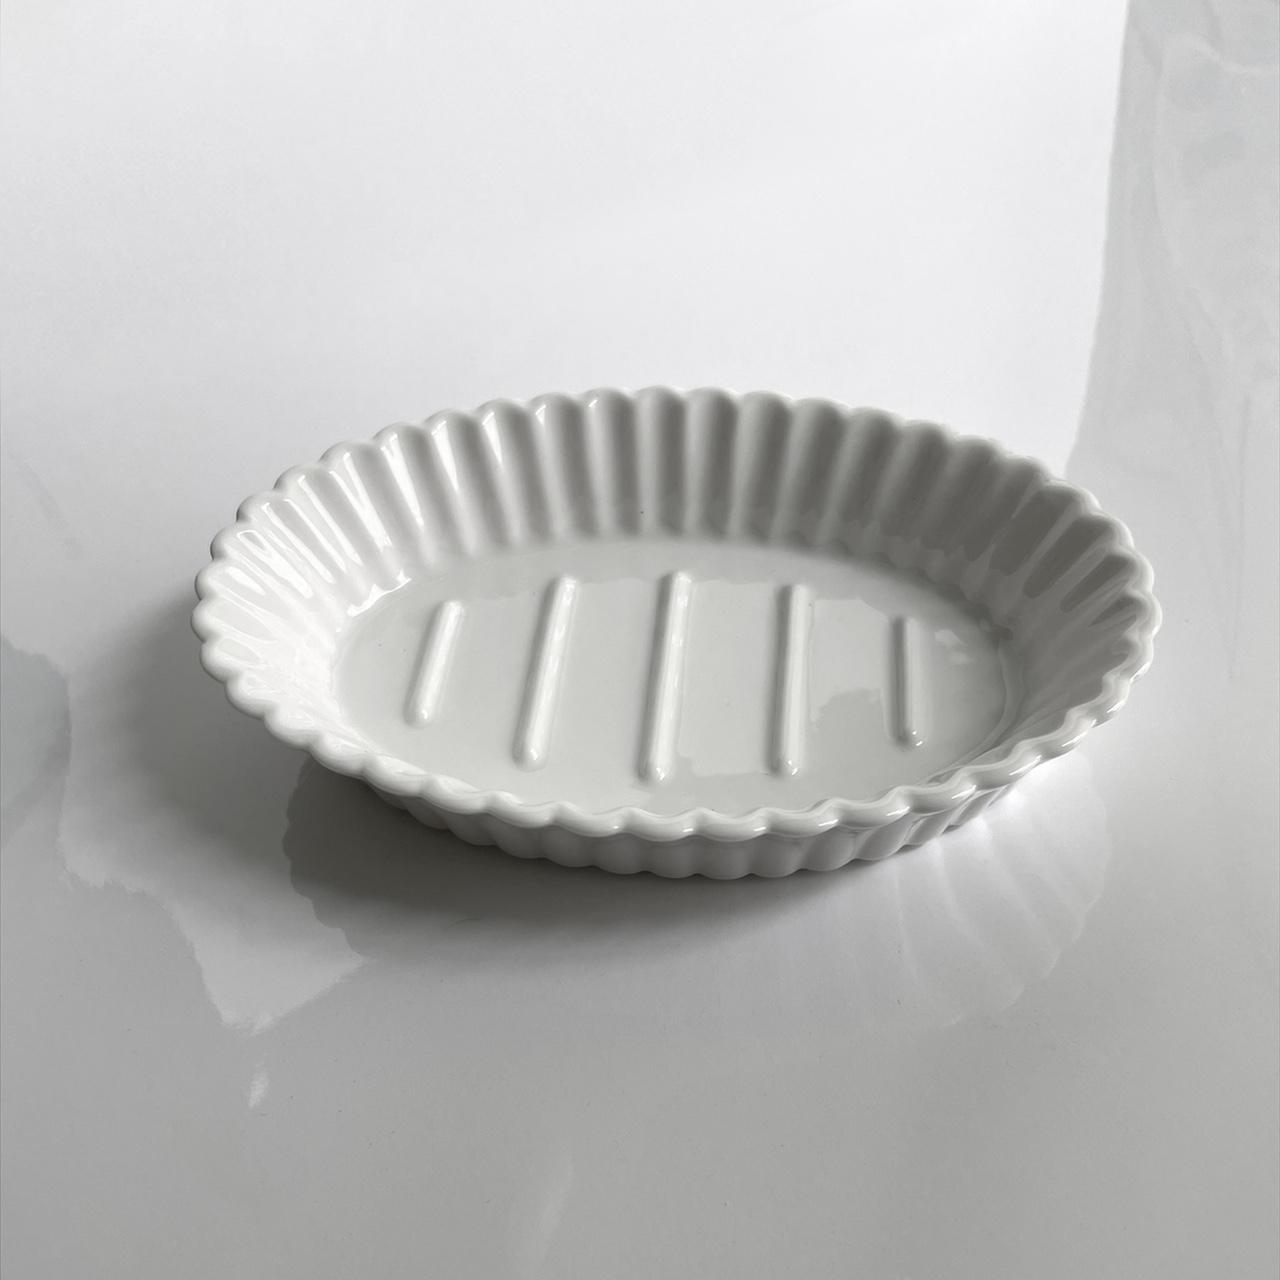 Product Image 1 - 🐚 Ceramic soap dish in